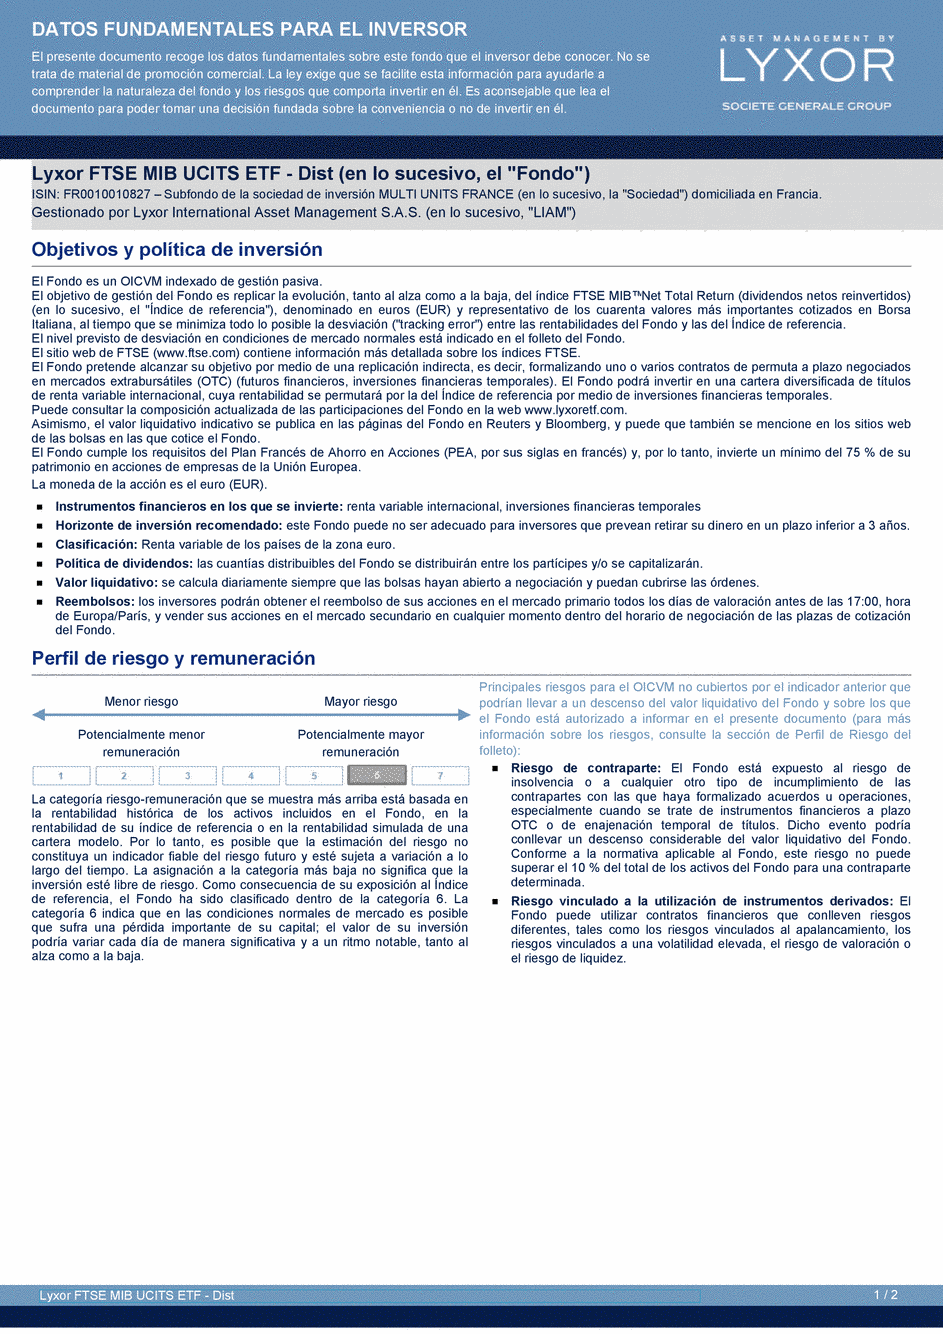 DICI Lyxor FTSE MIB UCITS ETF - Dist - 19/02/2021 - Espagnol